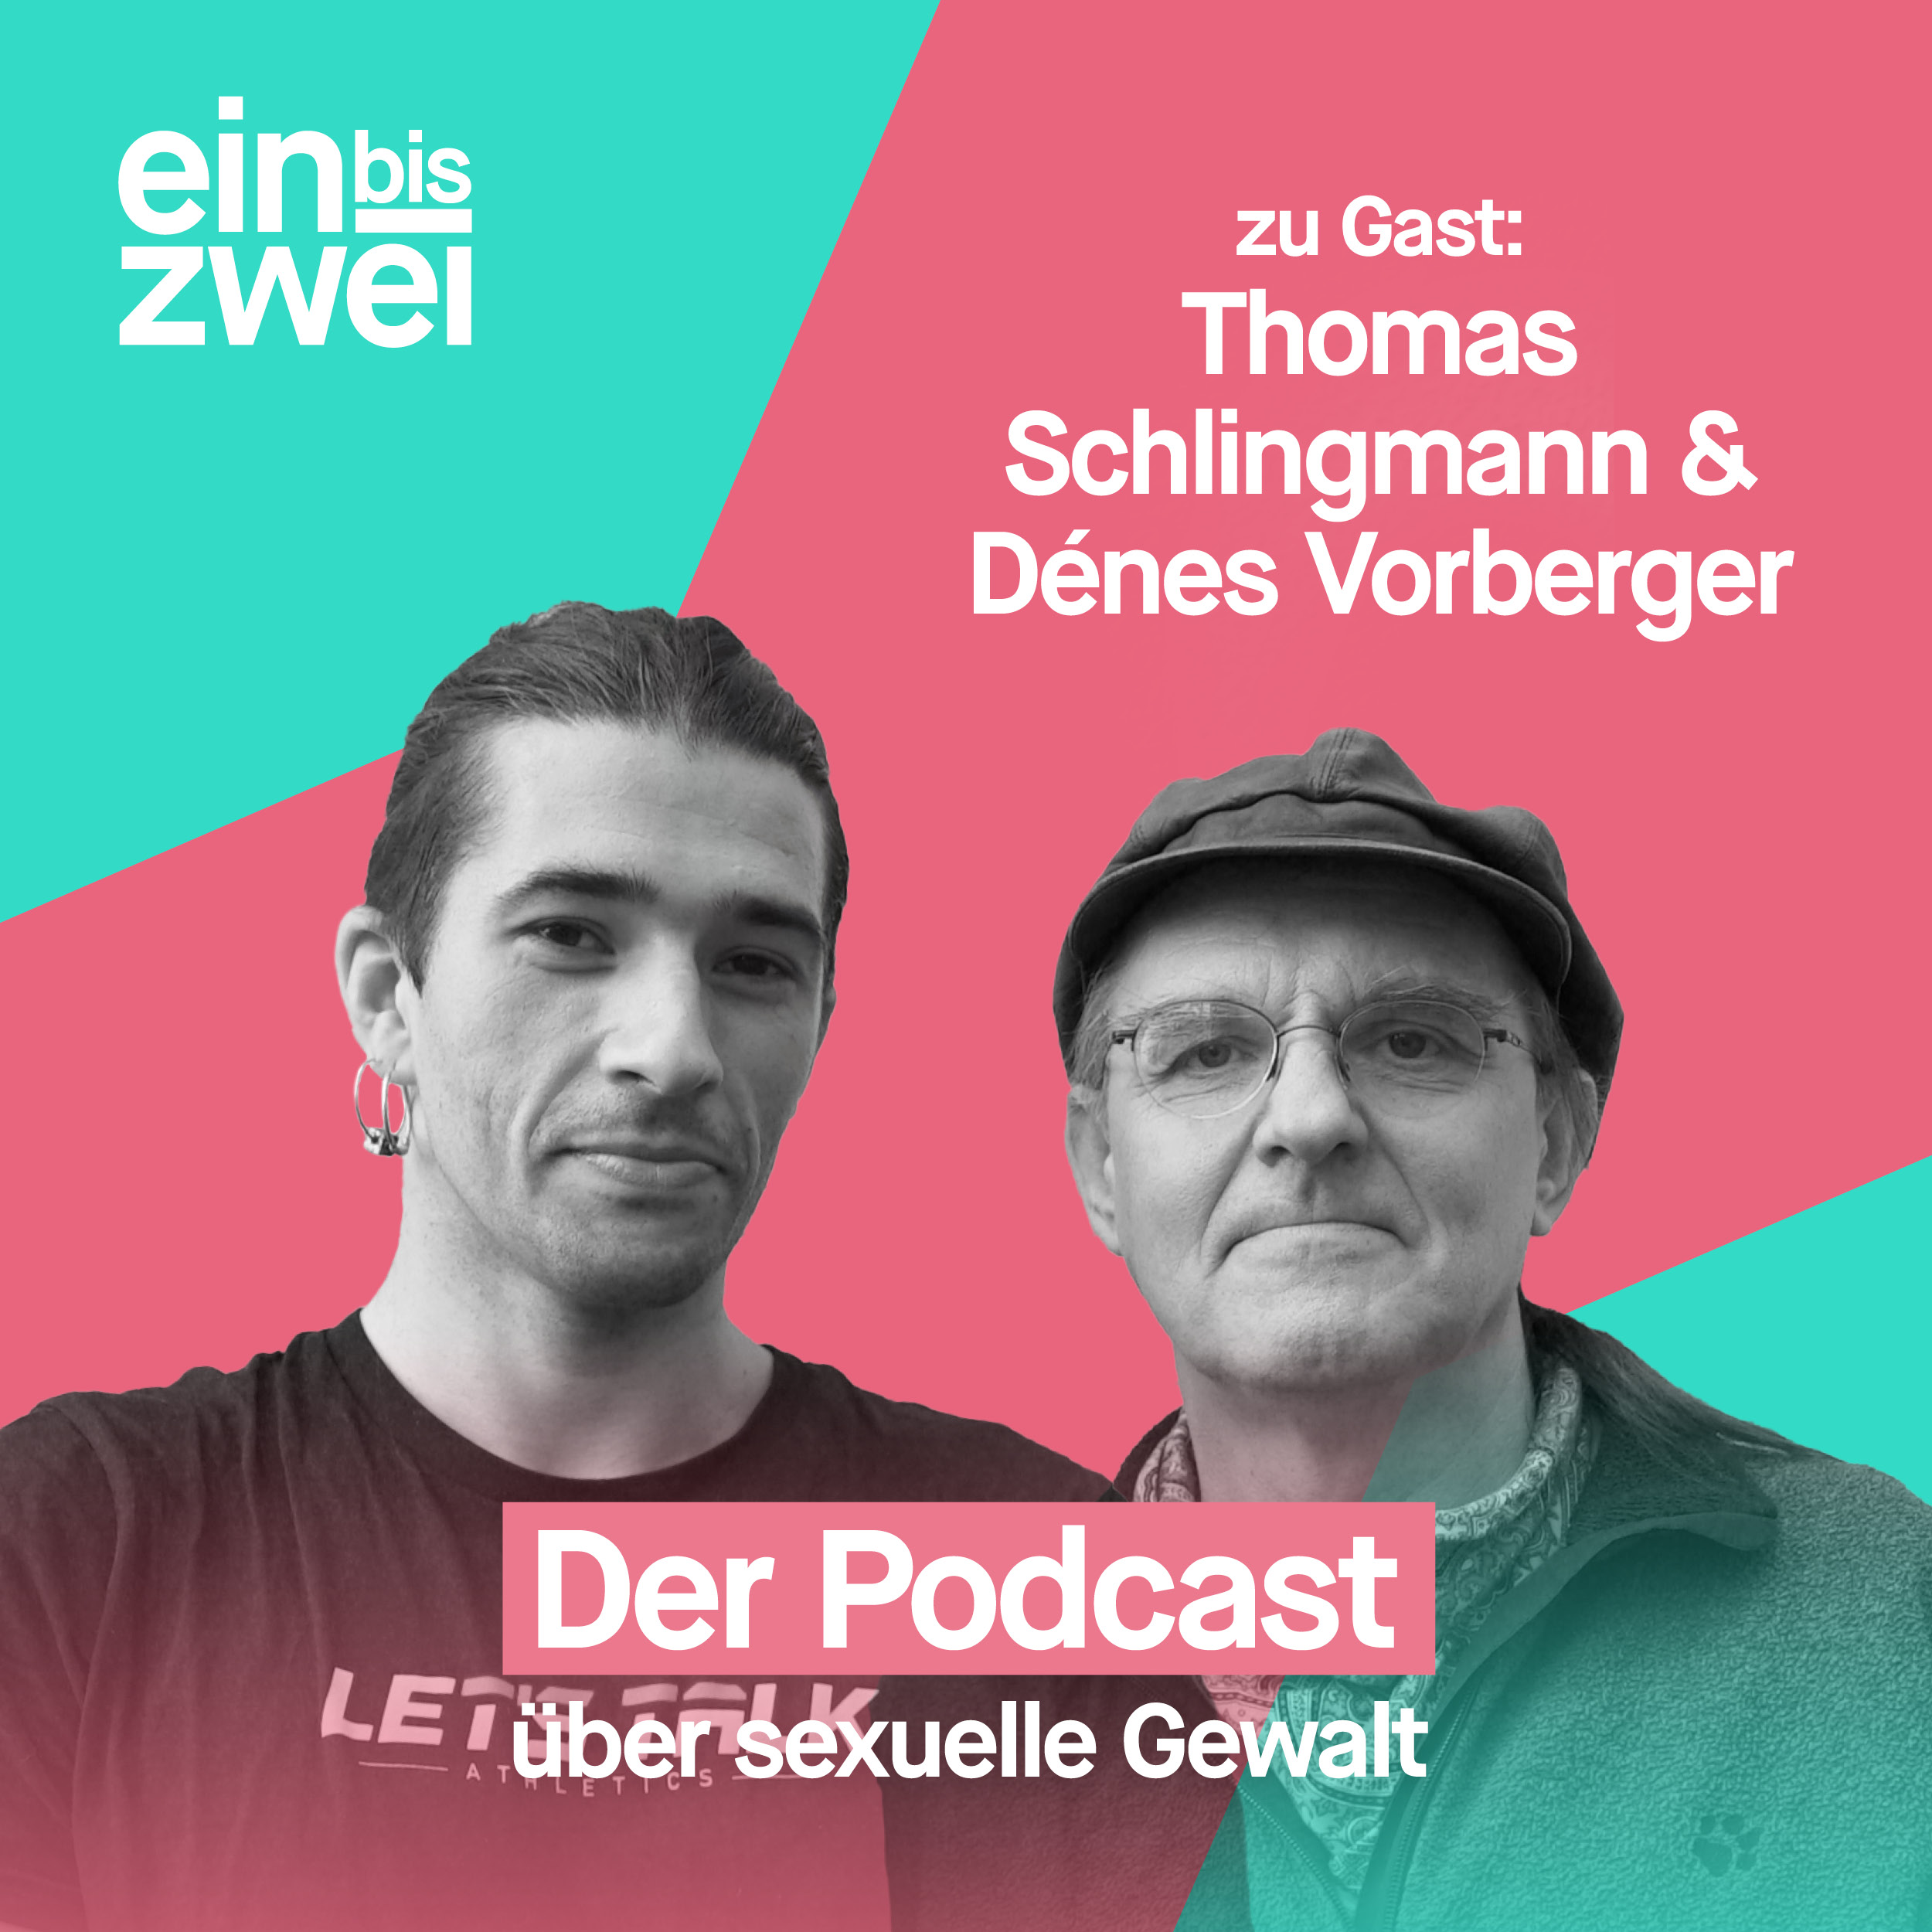 Dénes Vorberger & Thomas Schlingmann